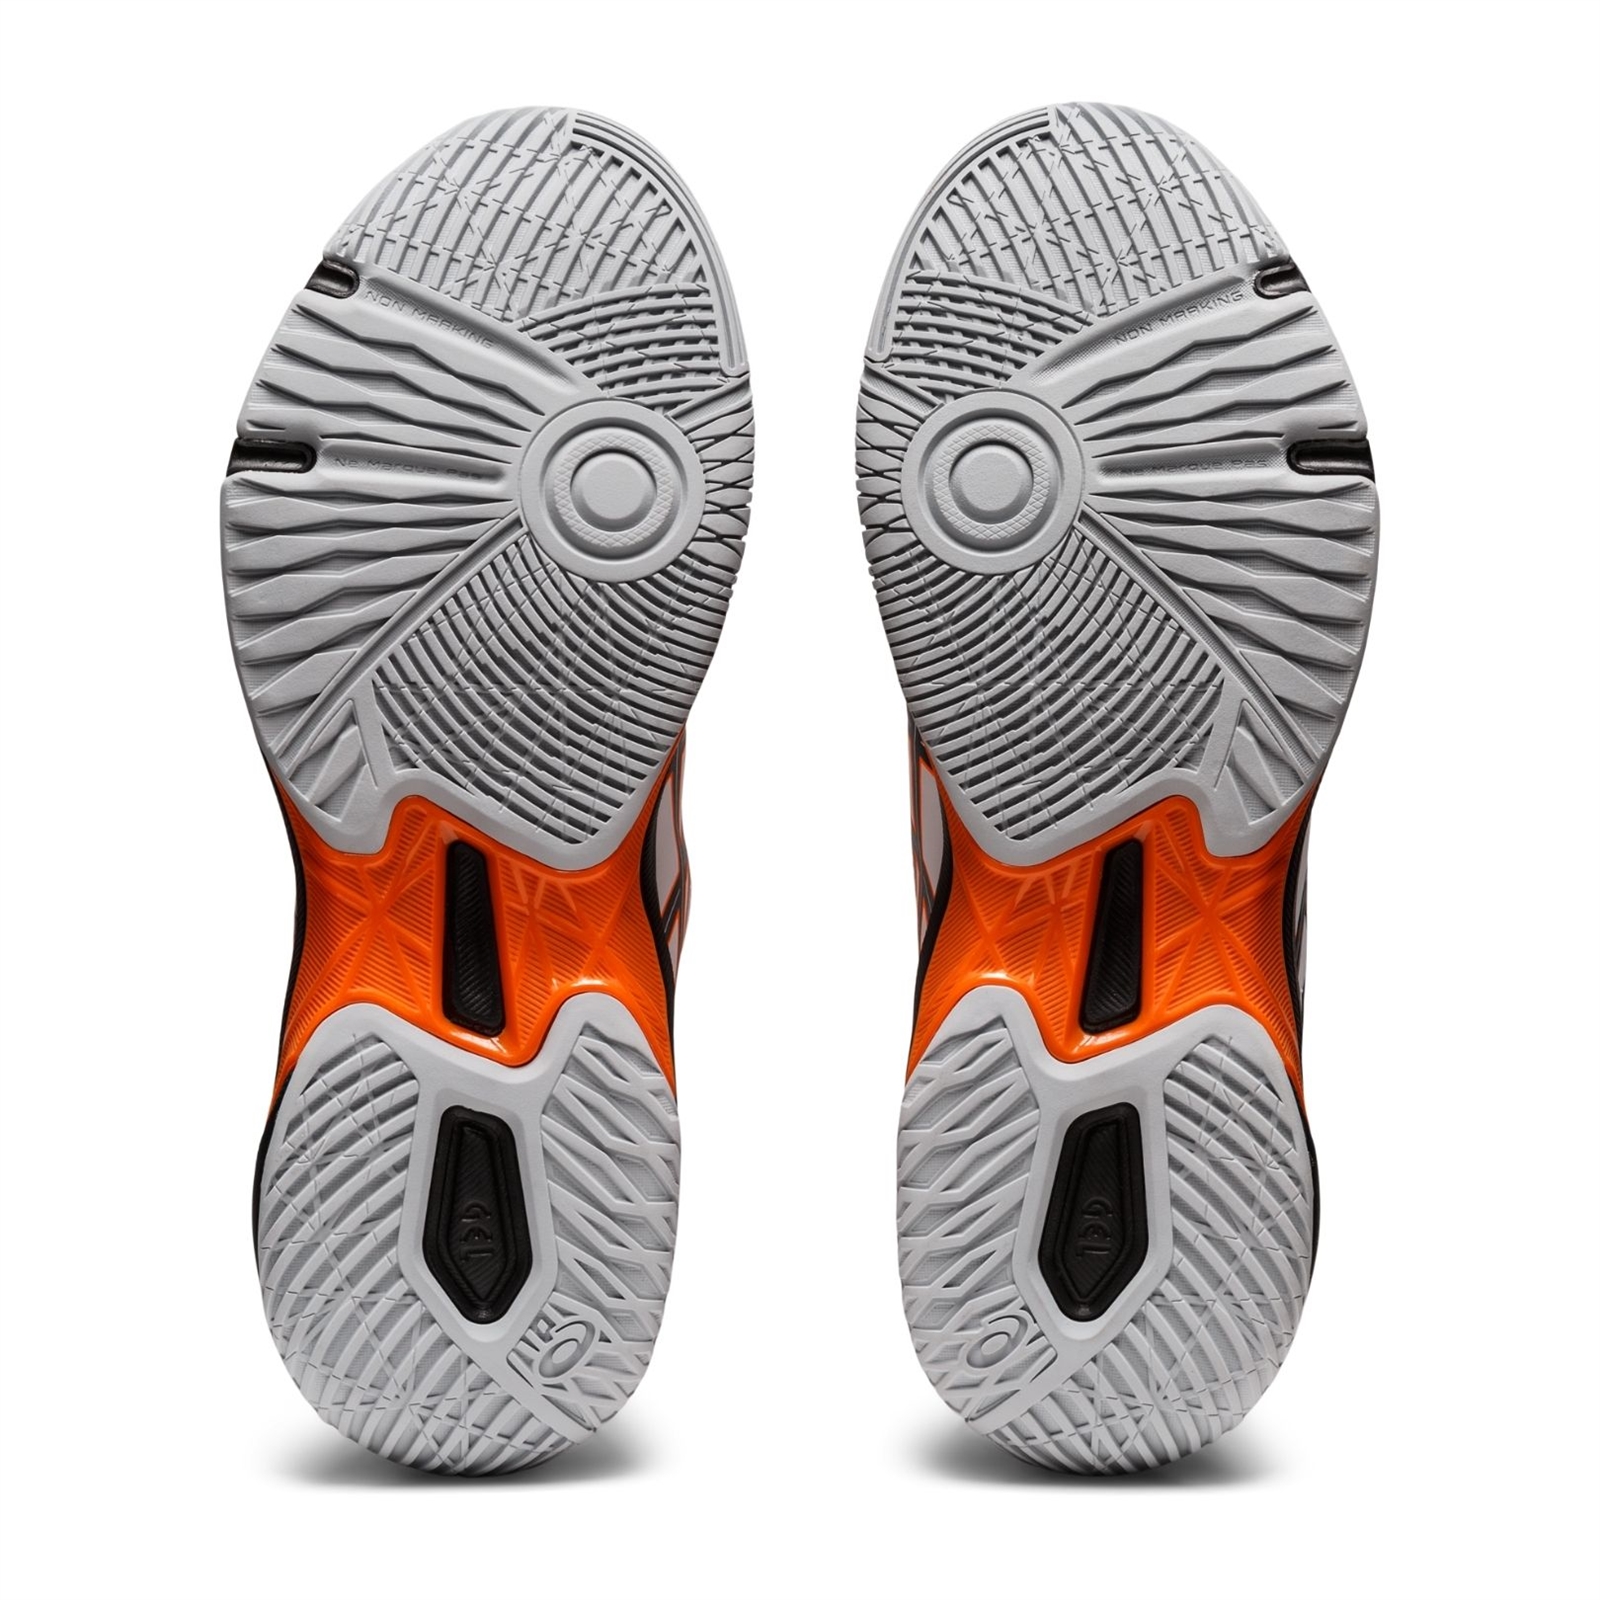 Asics Gel-Rocket 10 White | Badminton shoes → Buy here!